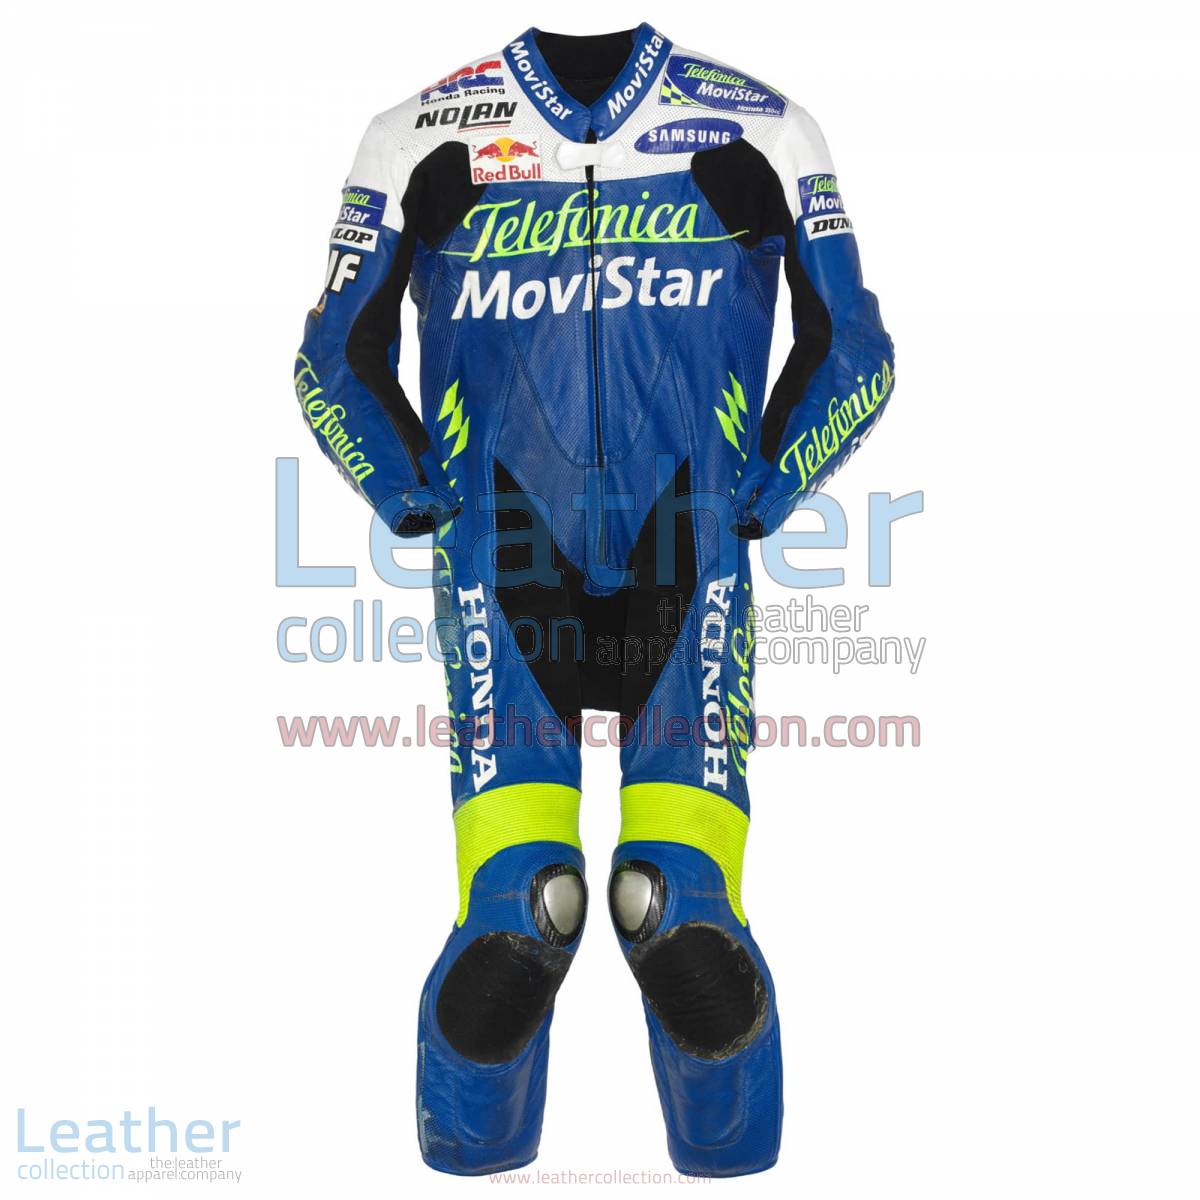 Dani Pedrosa Movistar Honda GP 2004 Leather Suit